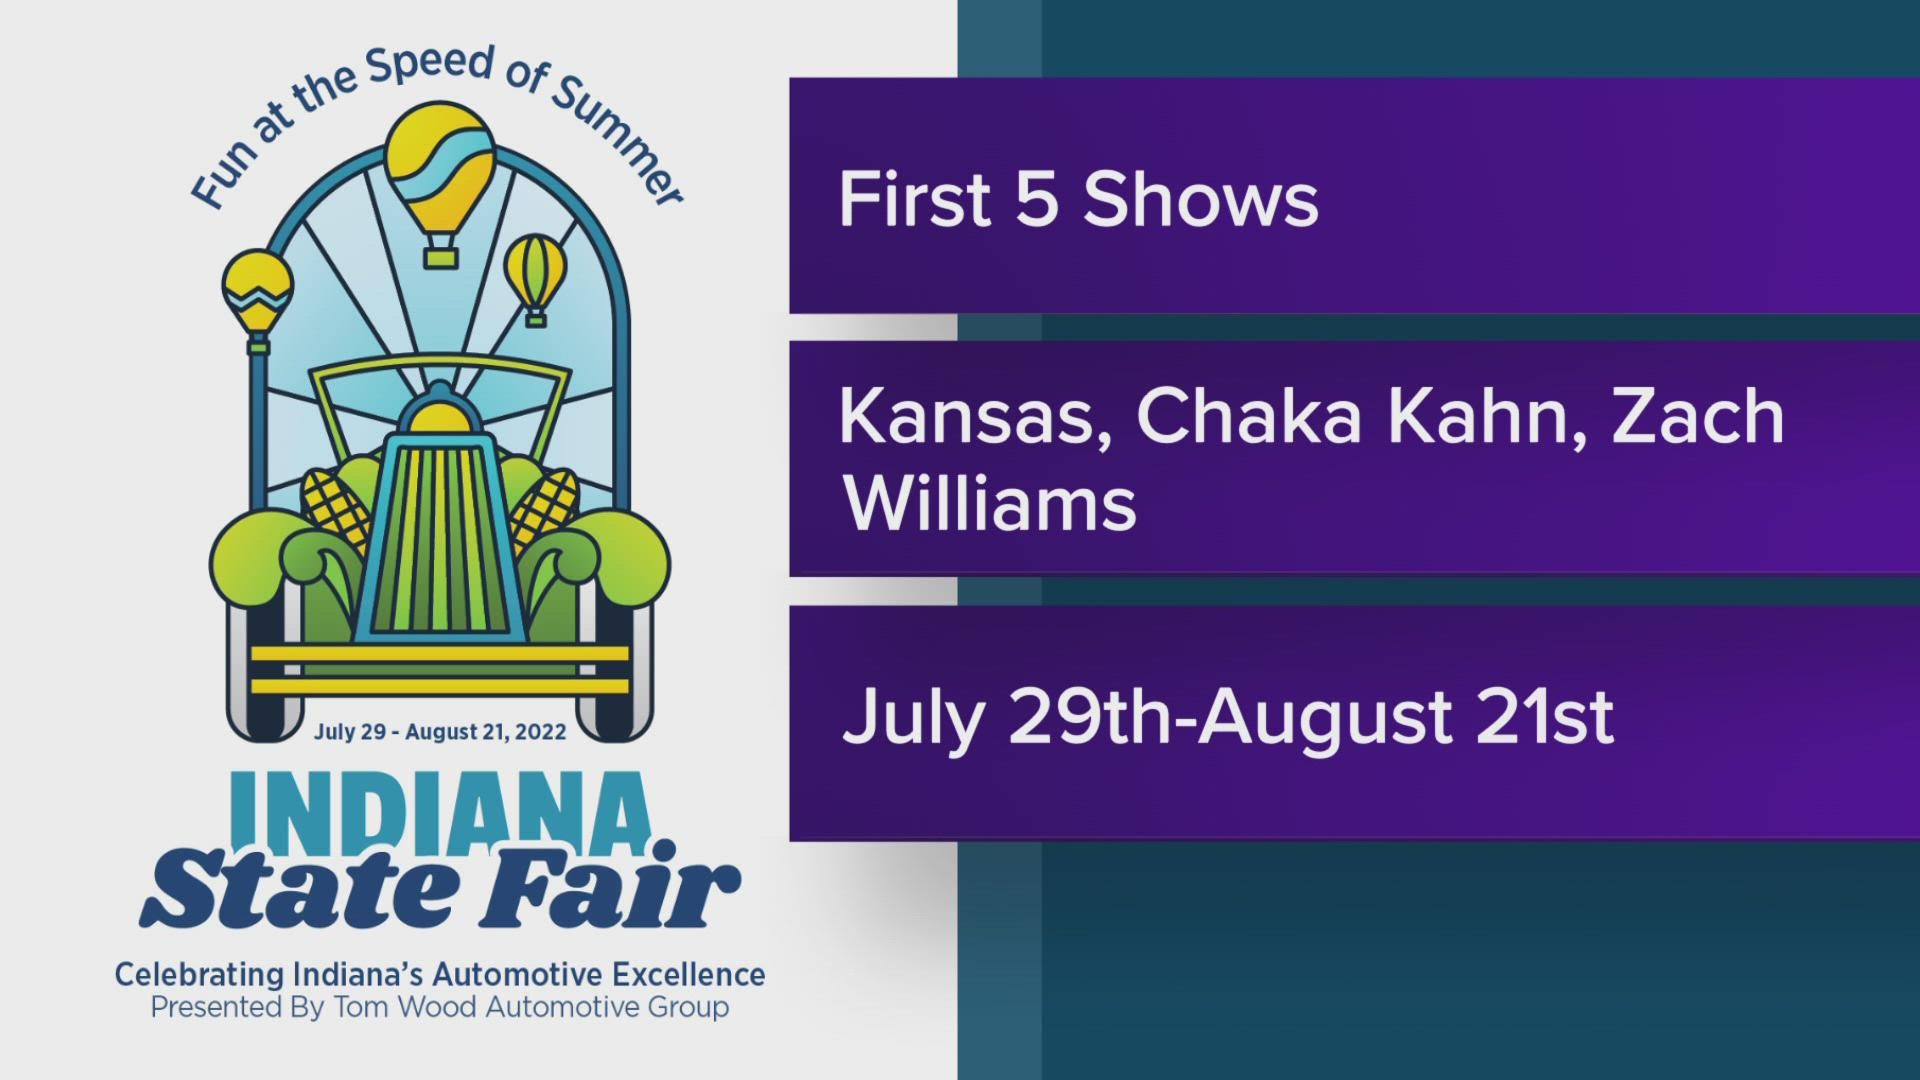 Chaka Khan, KANSAS to perform at 2022 Indiana State Fair